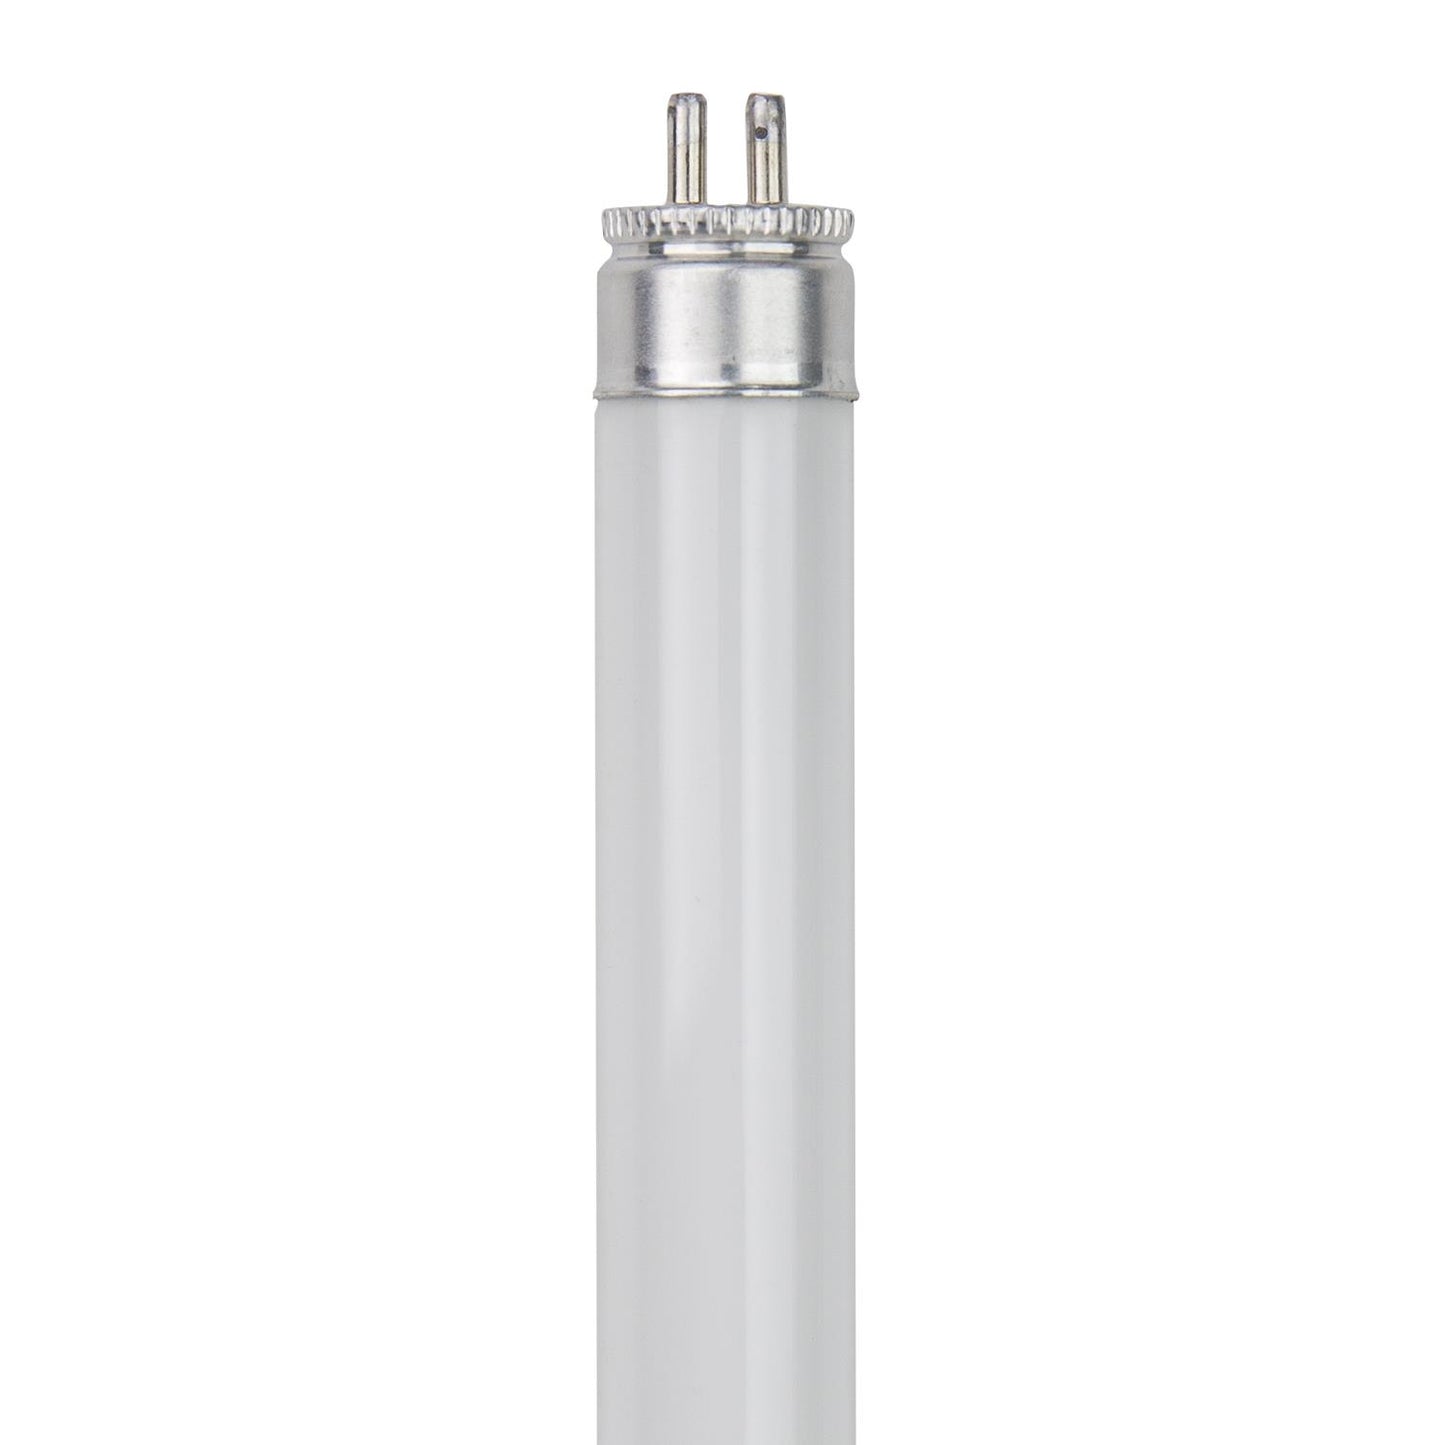 Sunlite F8T5/CW 8 Watt T5 Lamp Mini Bi-Pin (G5) Base Cool White